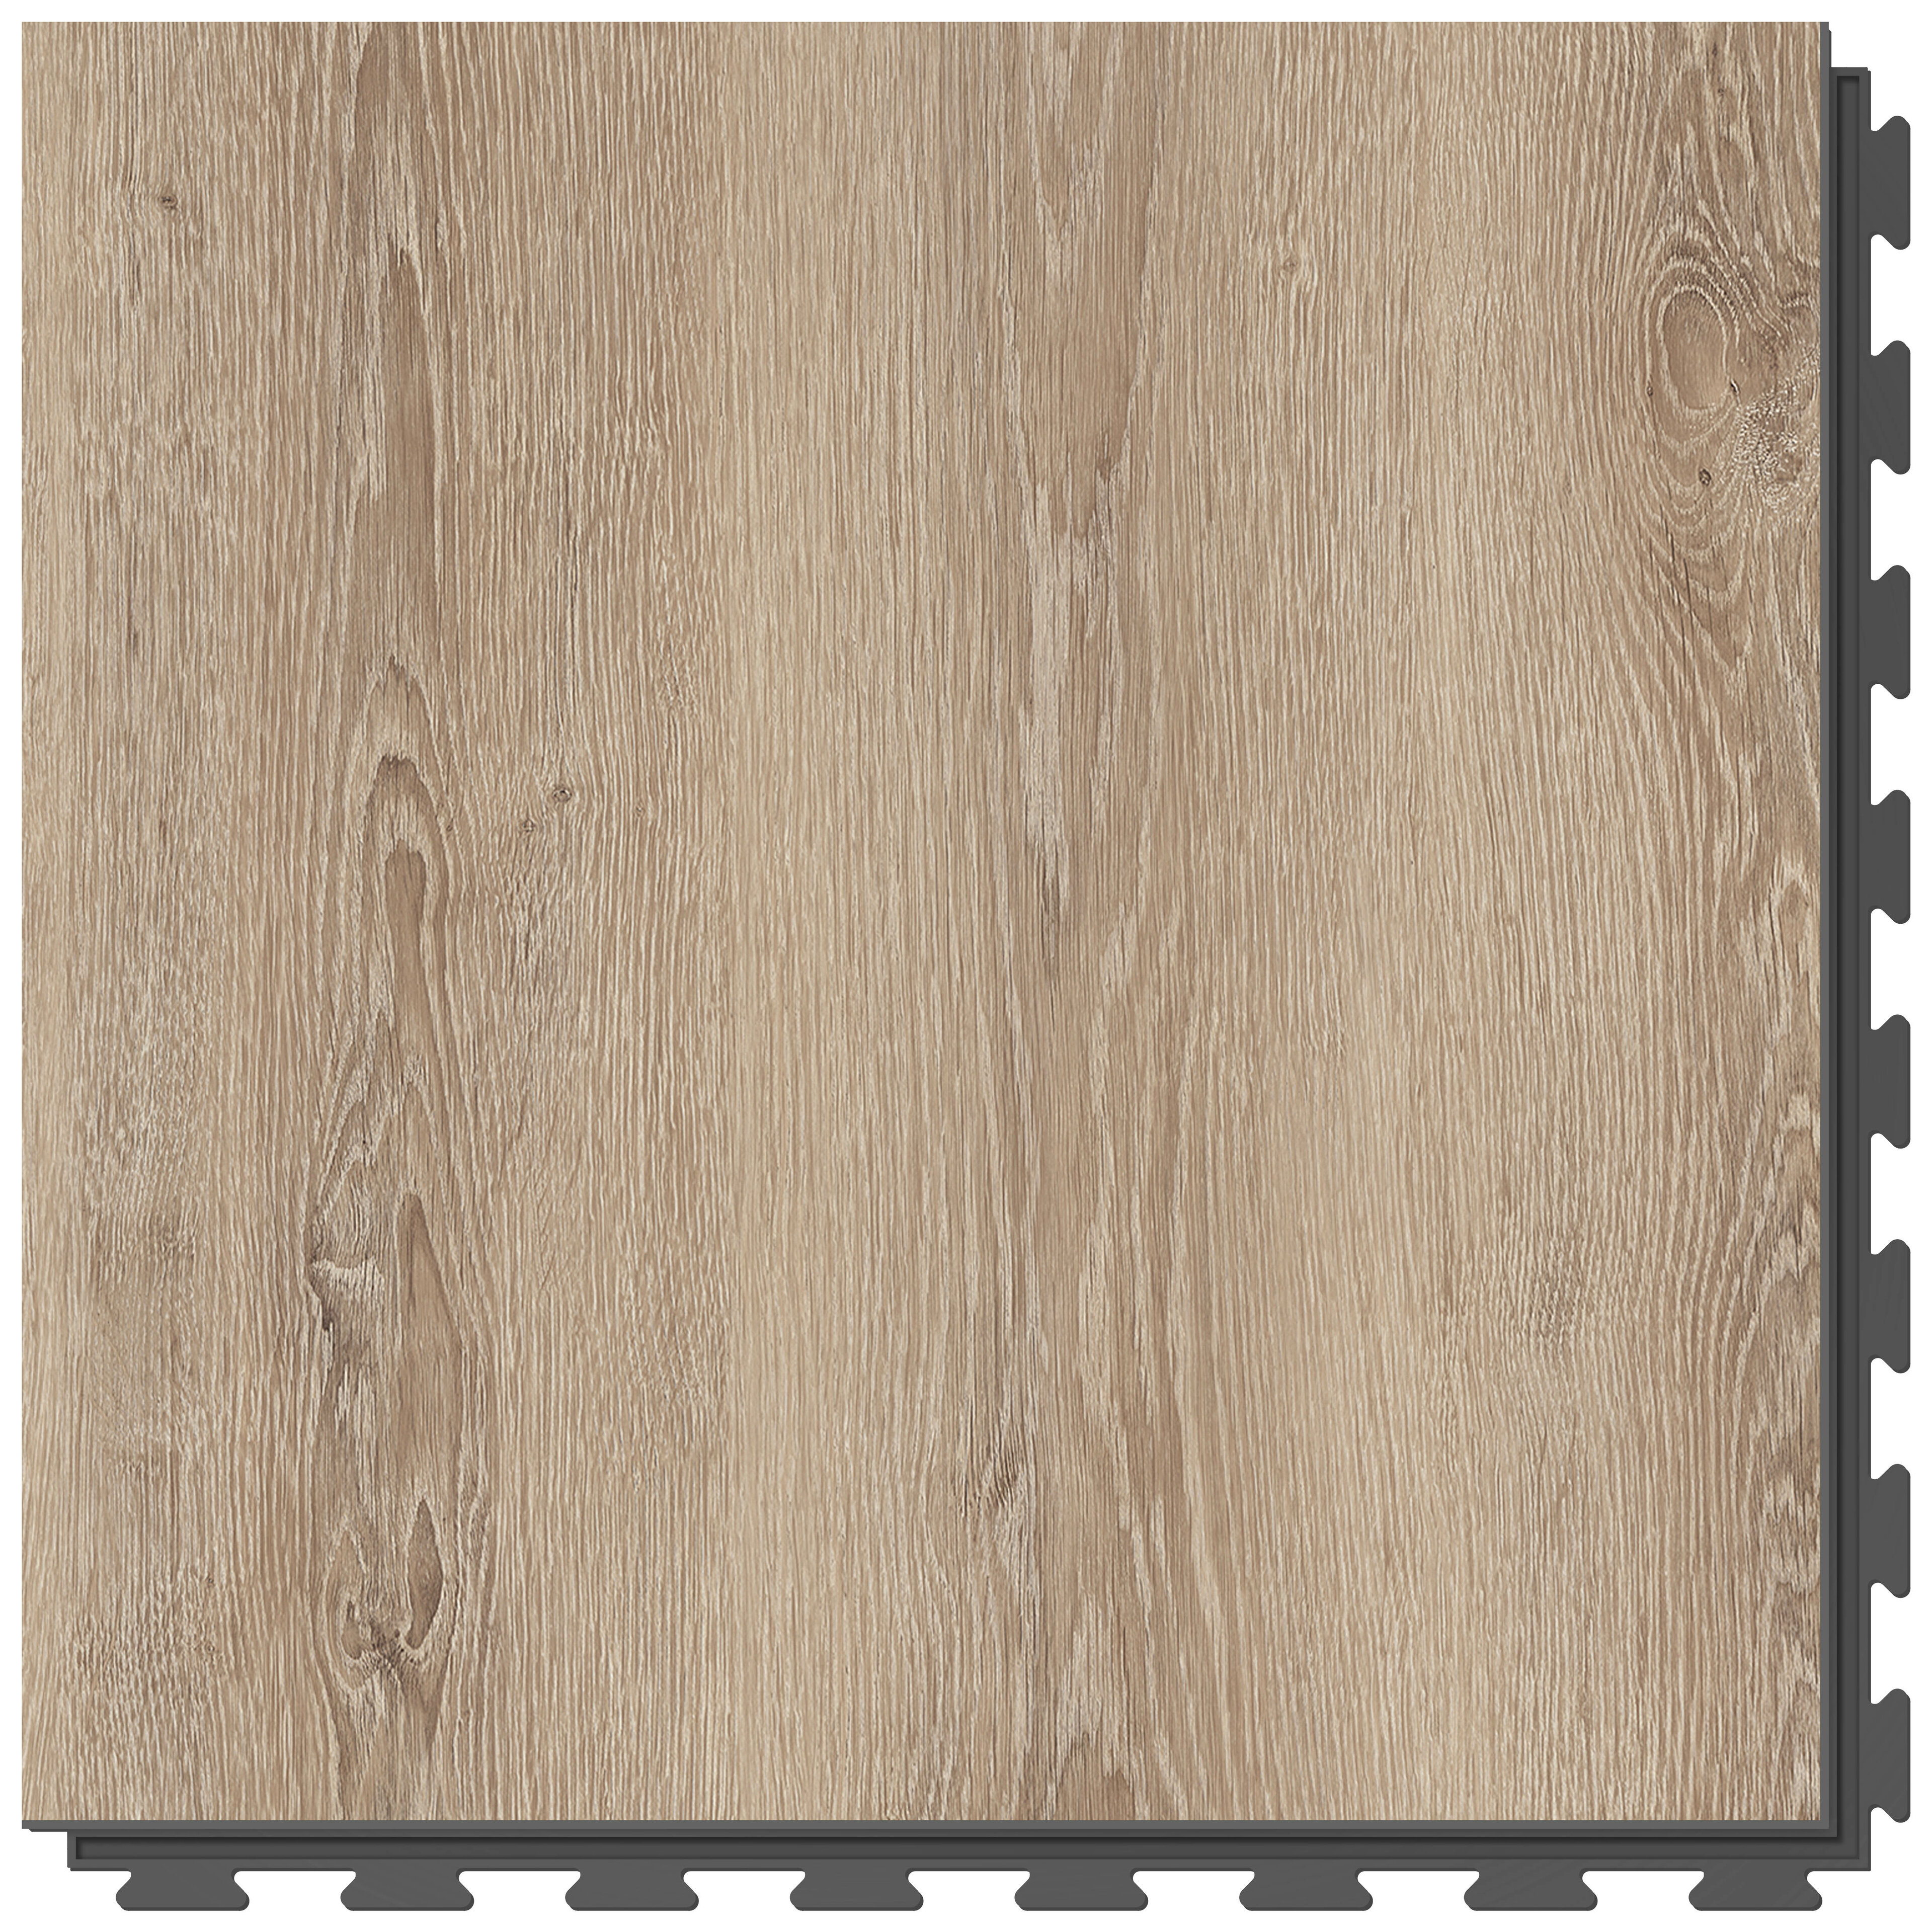 Hnědá PVC vinylová dlaždice Fortelock Business Tyrolean oak W001 Graphite - délka 66,8 cm, šířka 66,8 cm, výška 0,7 cm